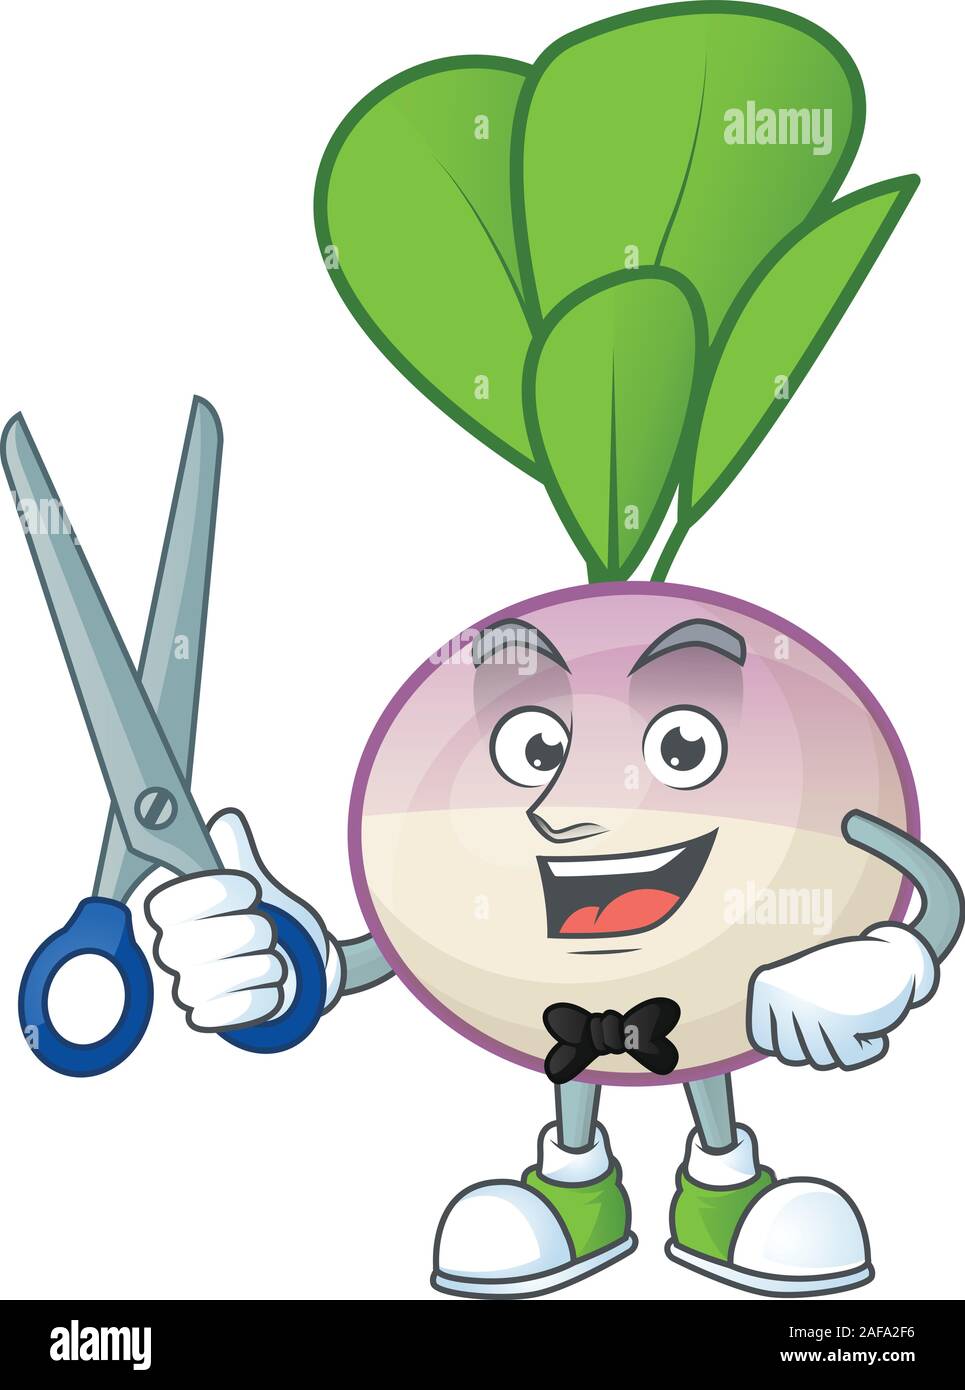 Smiley barber turnip mascot cartoon character design Stock Vector